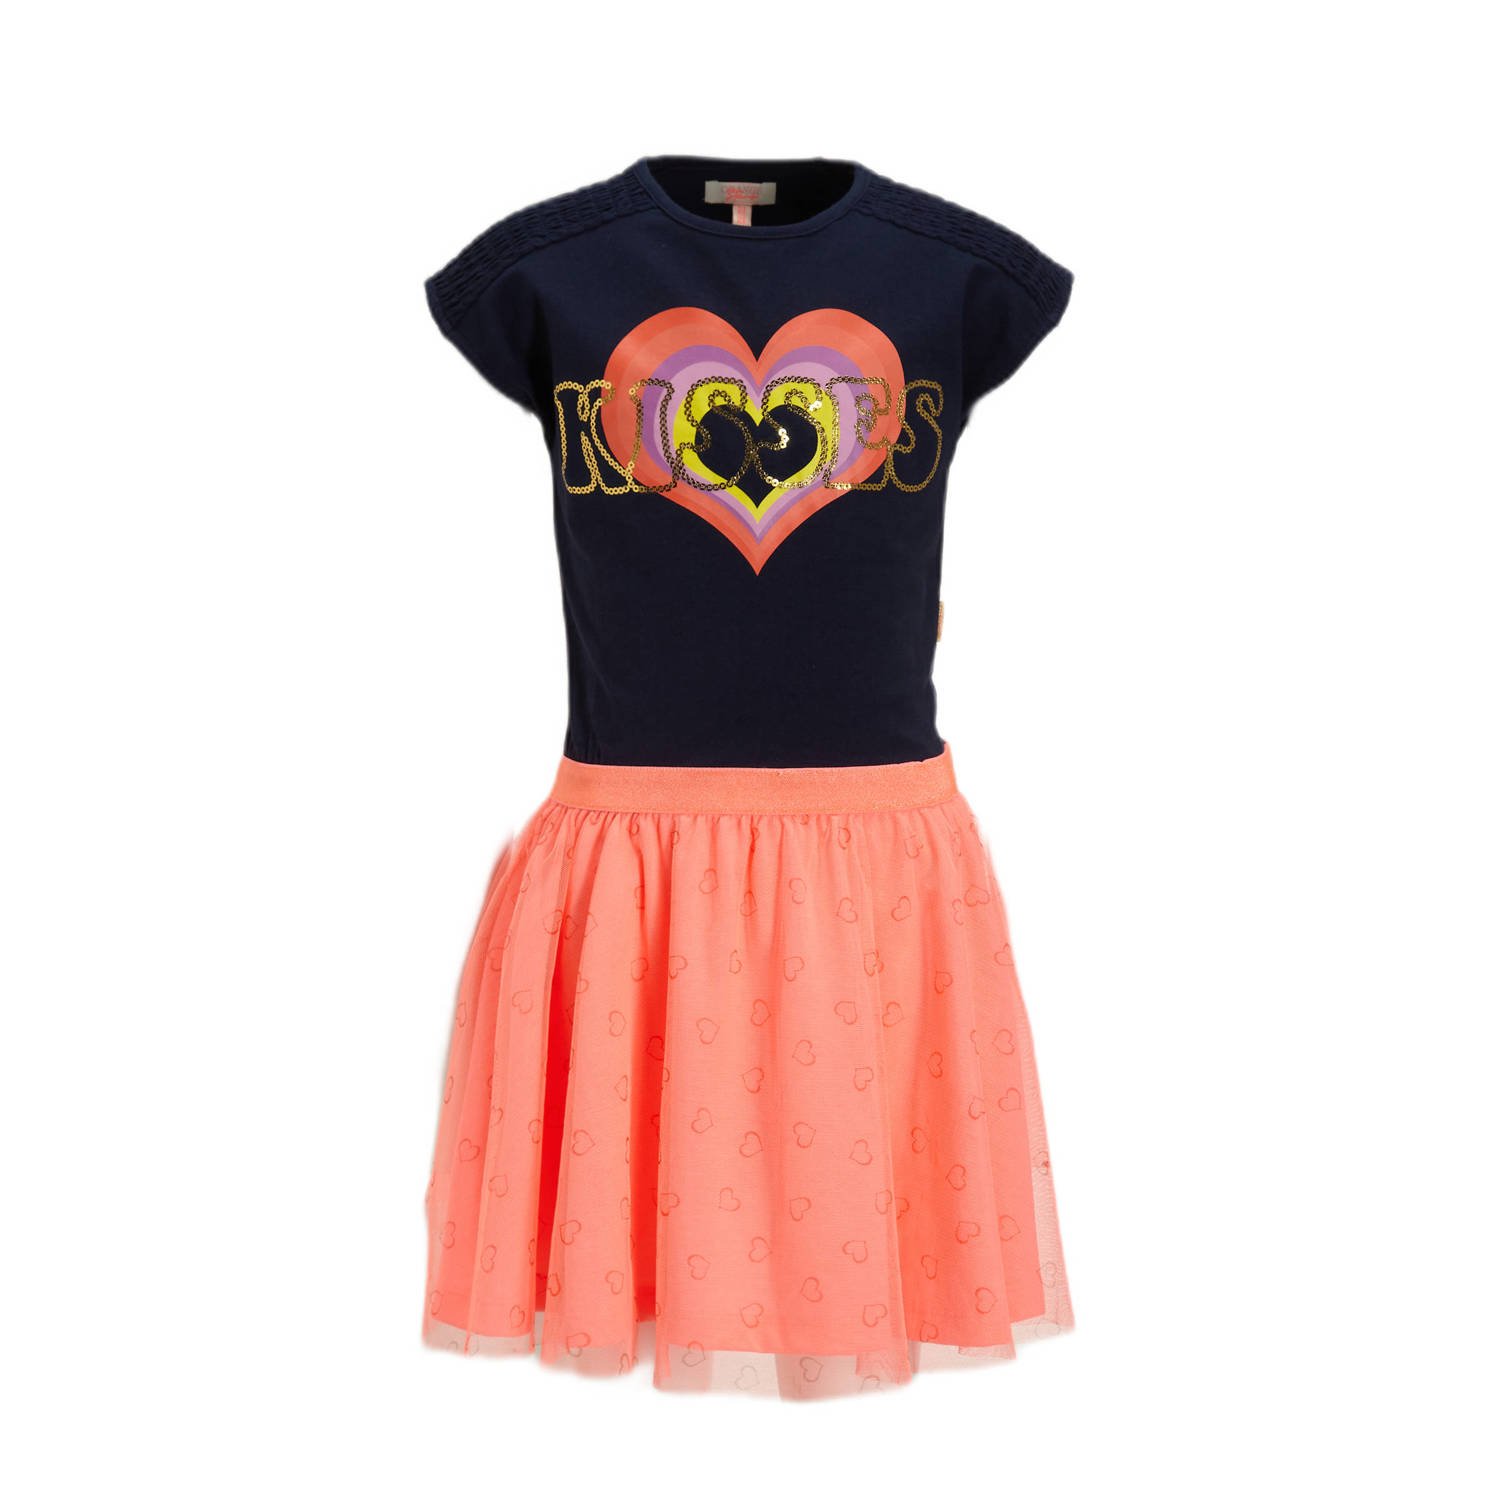 Orange Stars jurk Pebbles met tekstopdruk oranje zwart Meisjes Katoen Panterprint 122 128